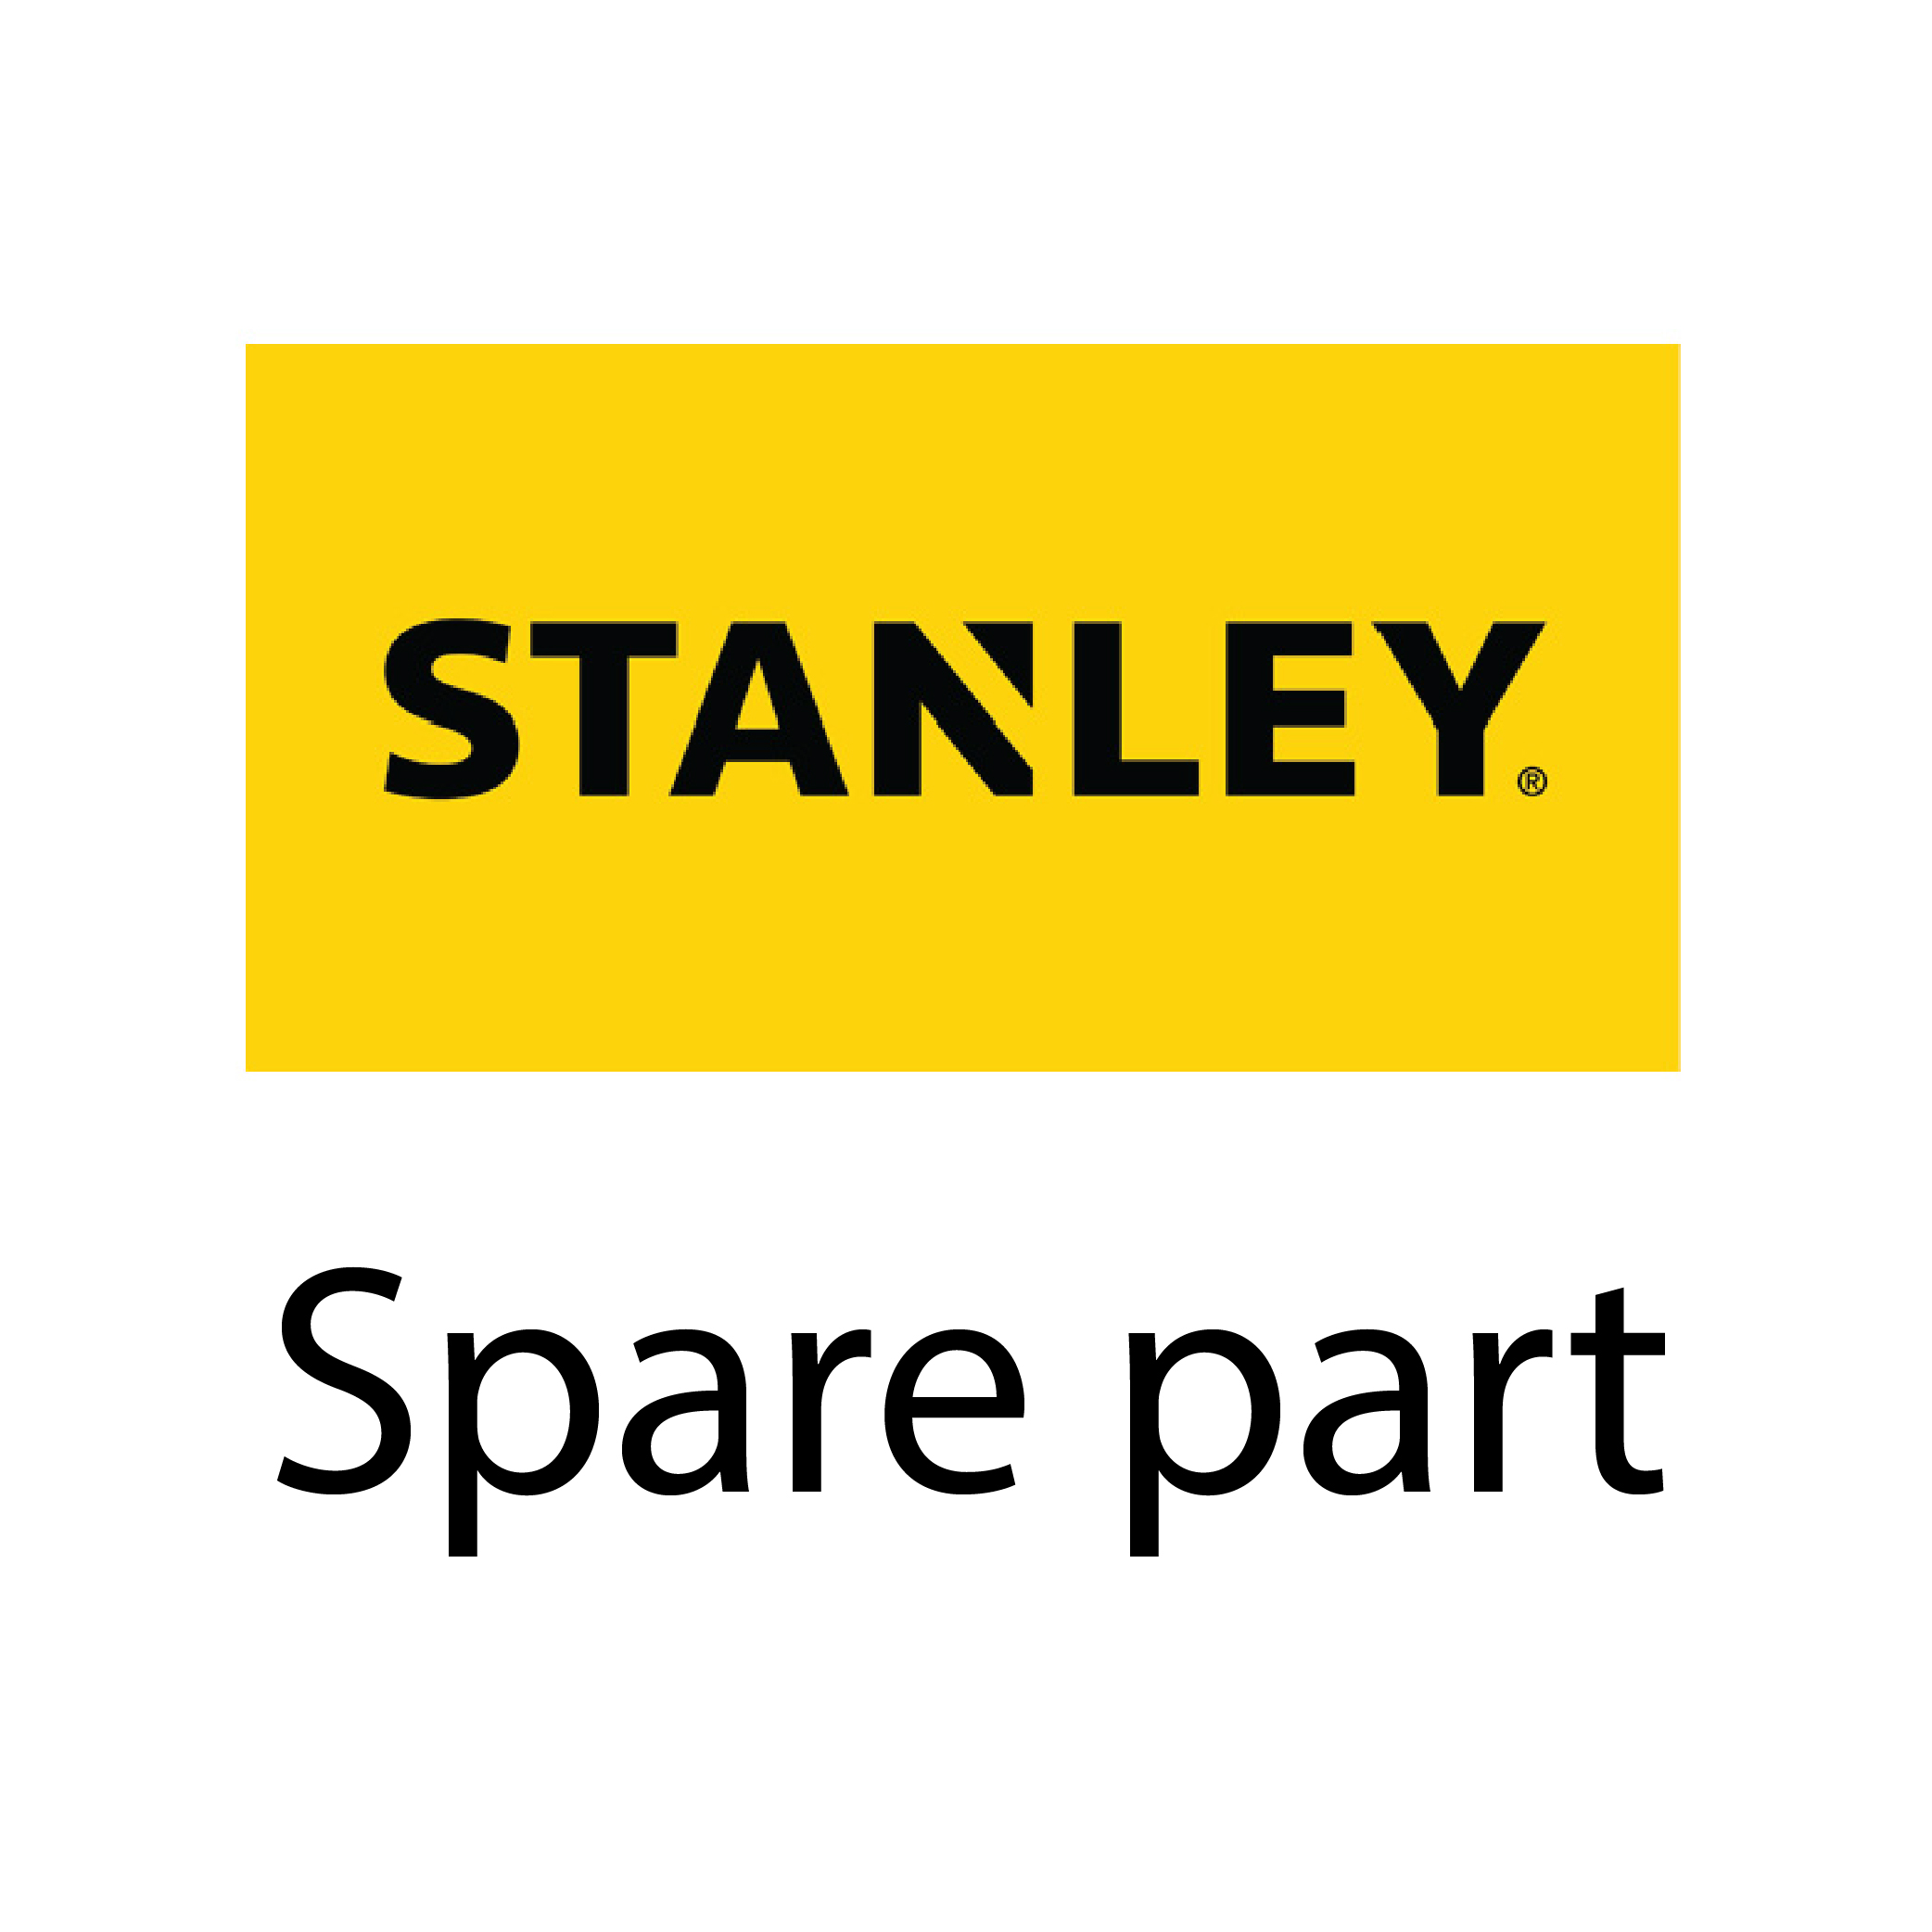 SKI - สกี จำหน่ายสินค้าหลากหลาย และคุณภาพดี | STANLEY #90533581 ทุ่น STEL421